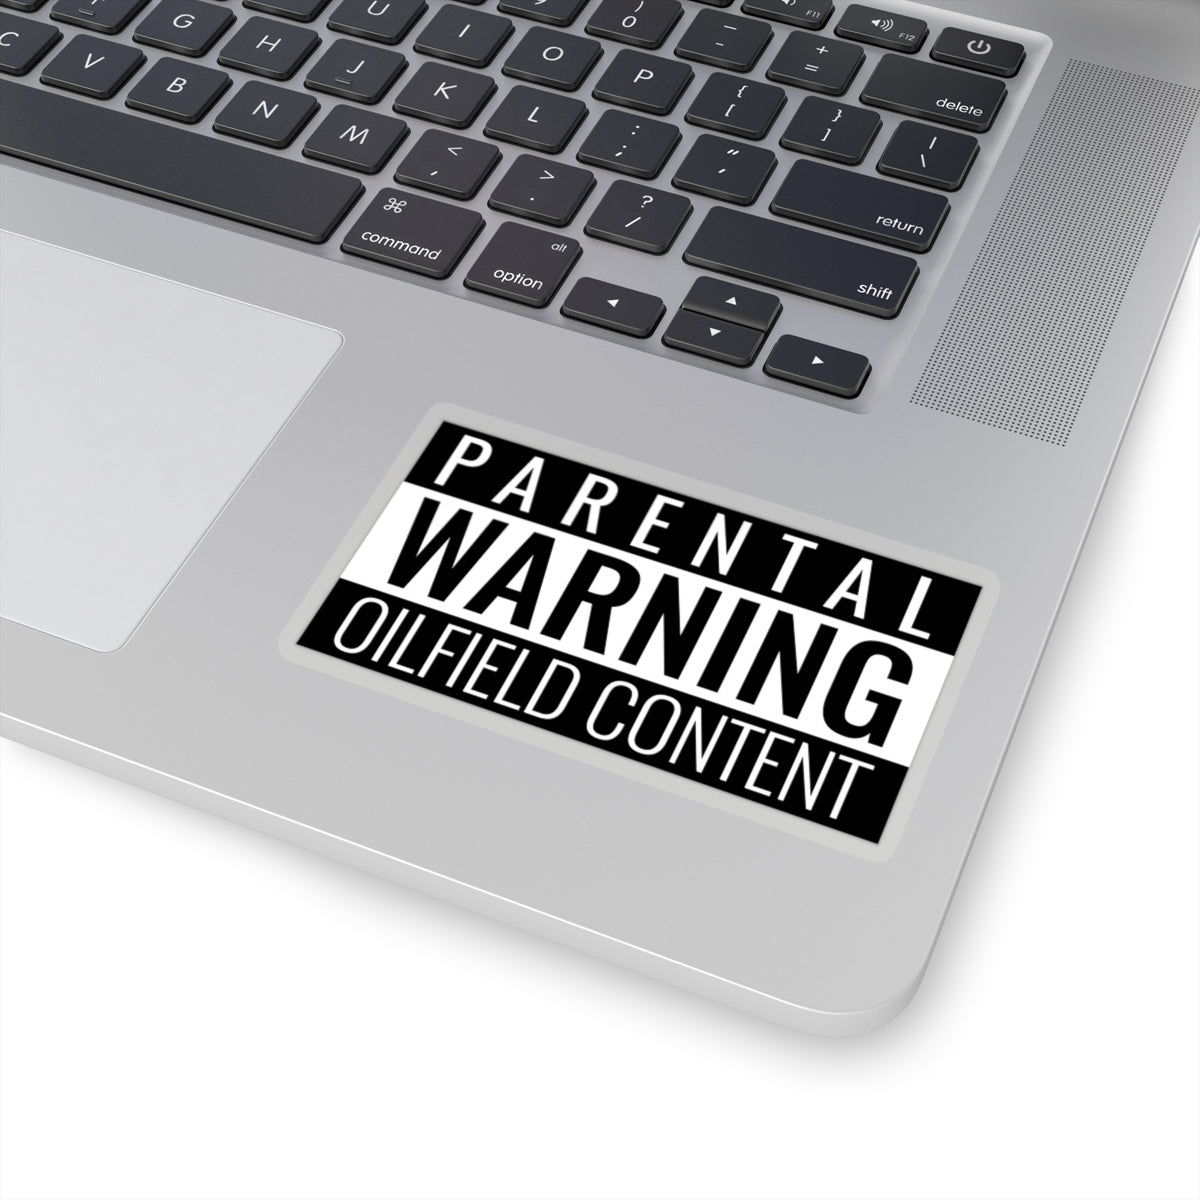 Parental Warning Oilfield Content Sticker